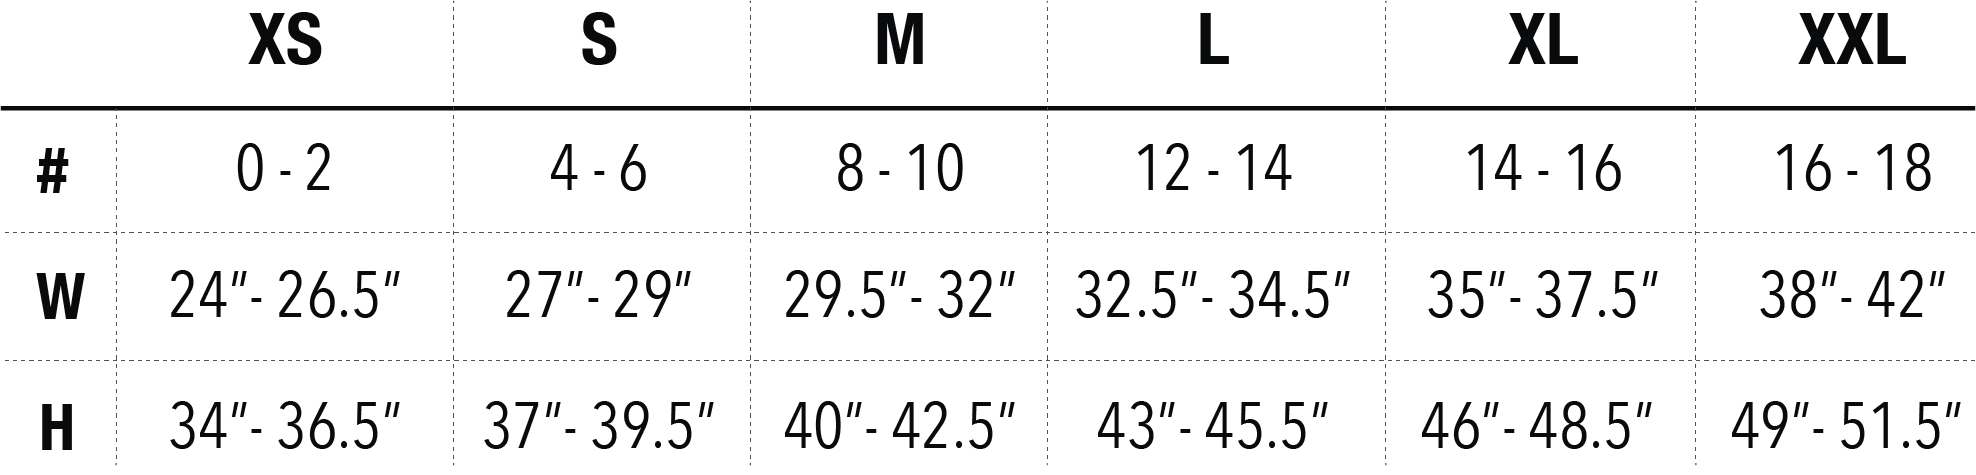 La Coochie XS - XXL Size Chart